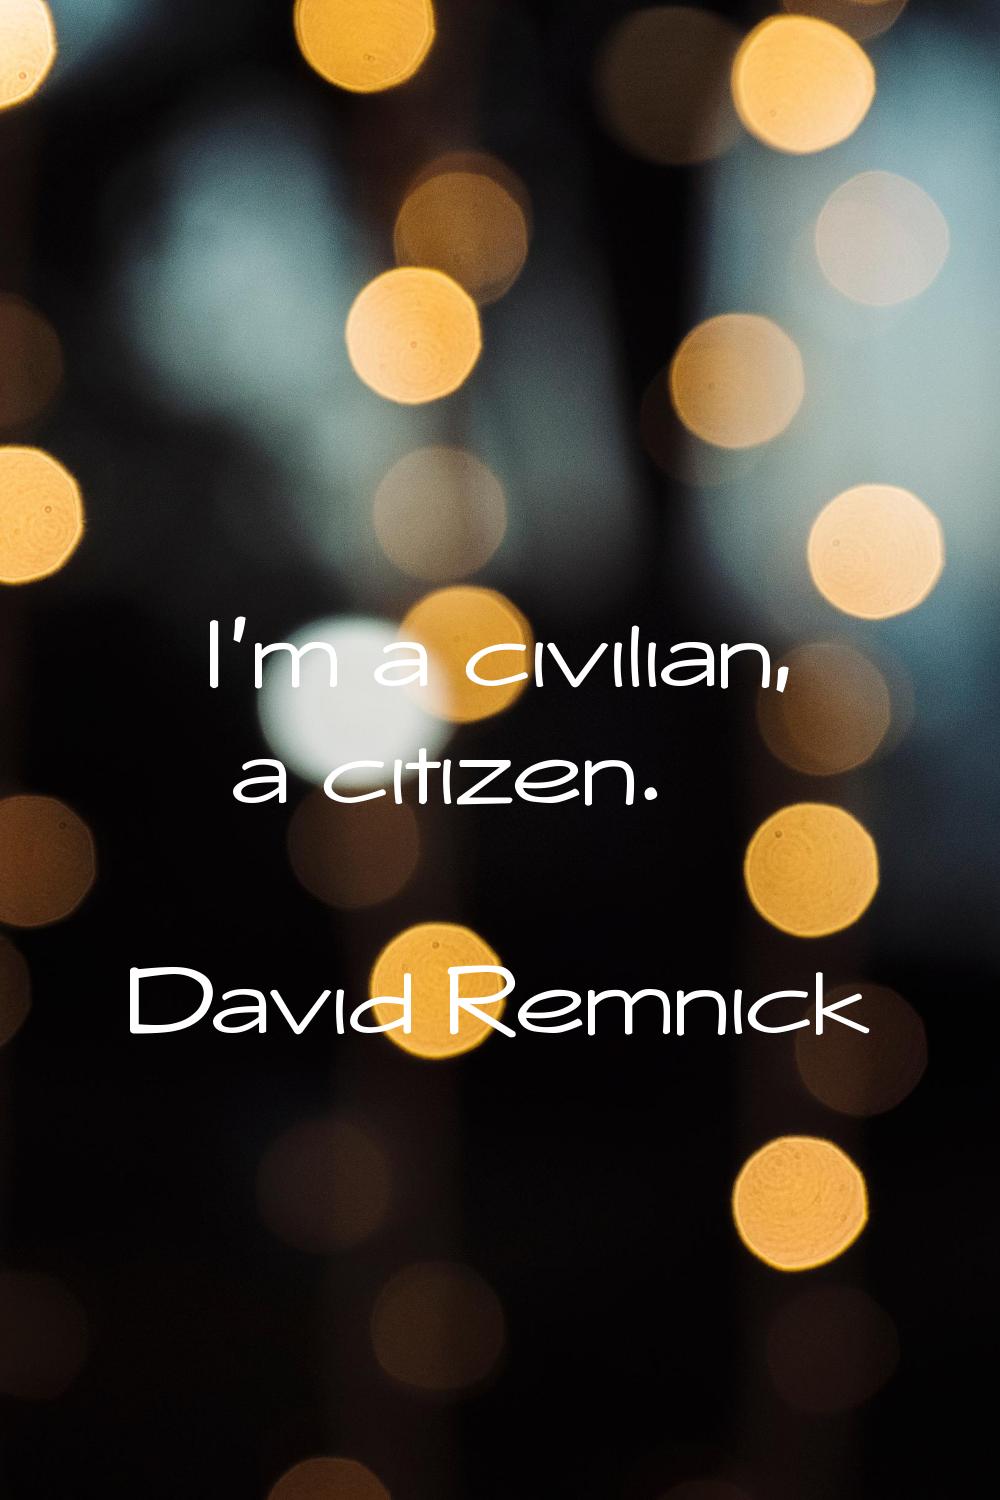 I'm a civilian, a citizen.